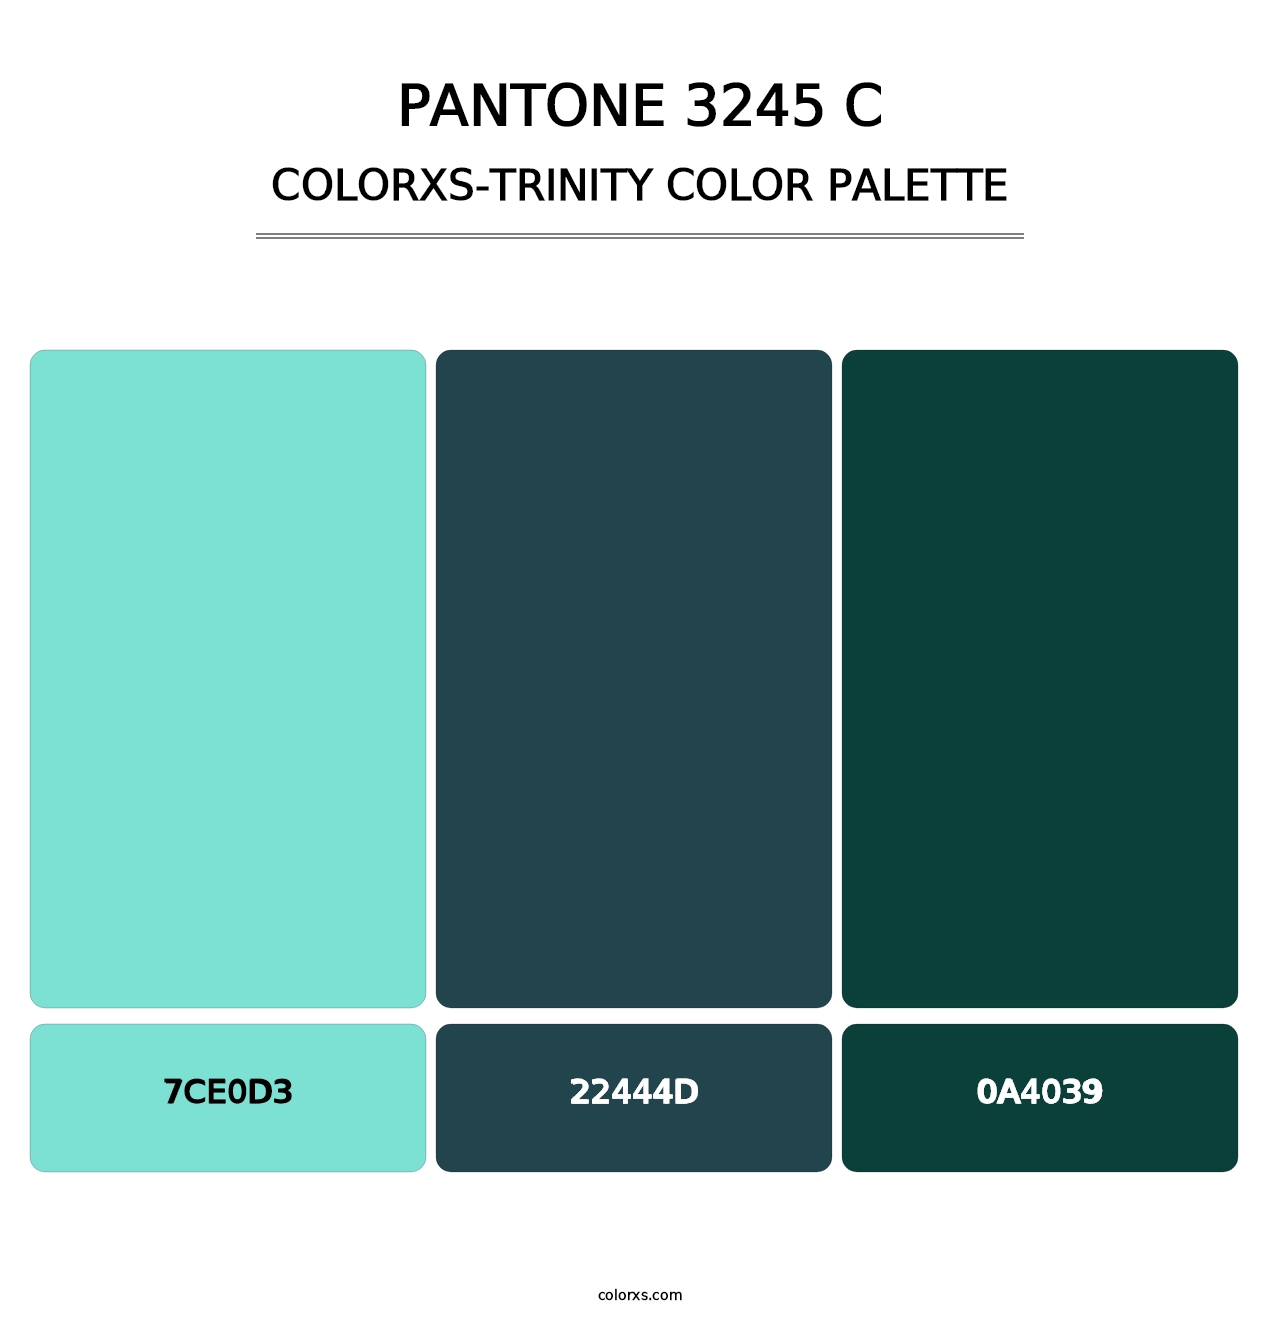 PANTONE 3245 C - Colorxs Trinity Palette